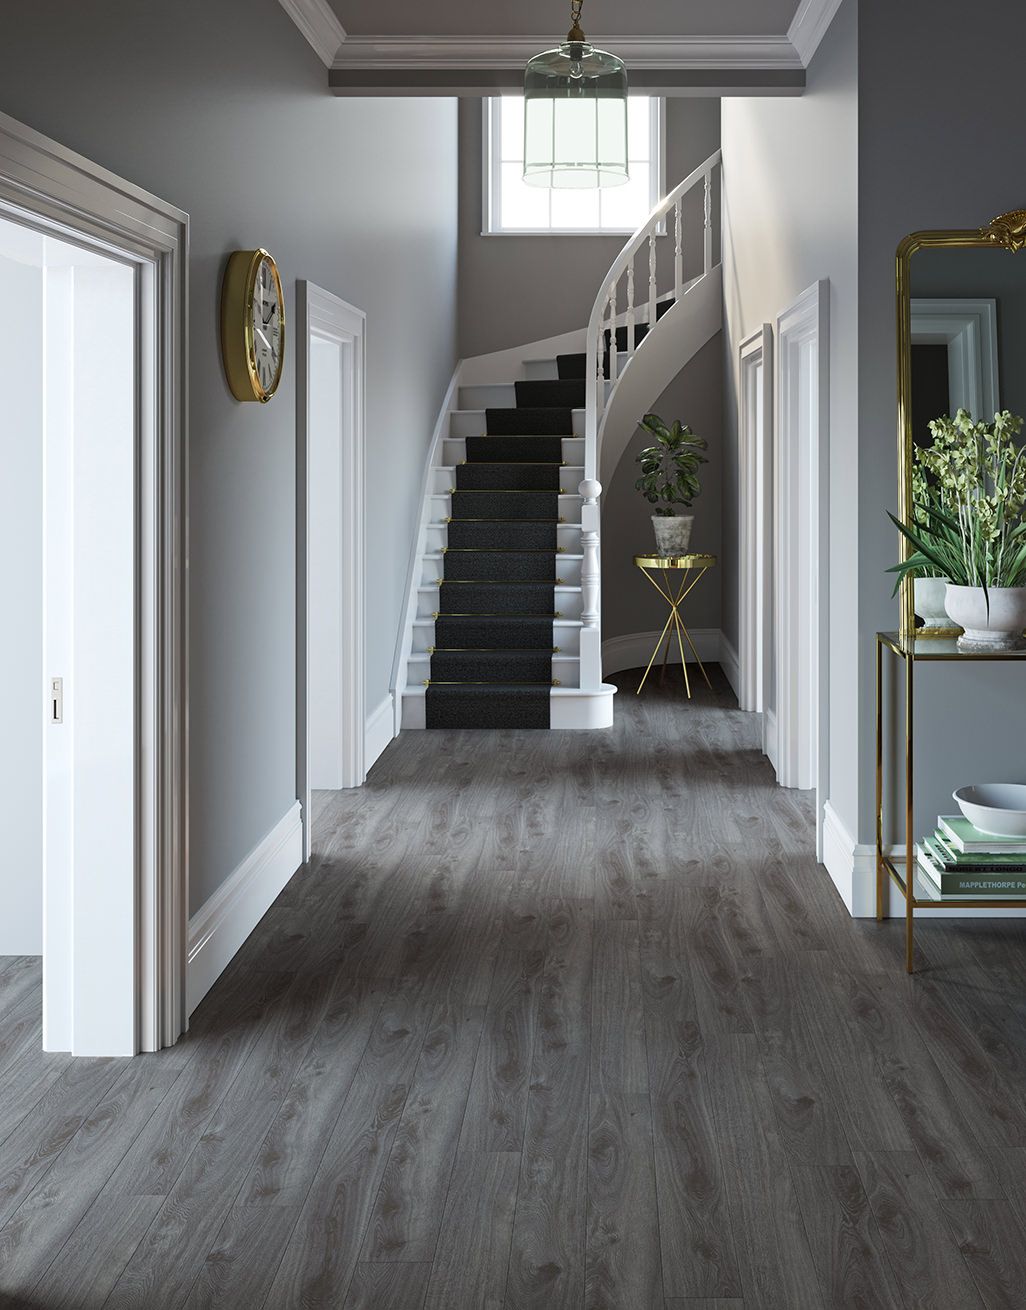 Prestige Grey Oak Laminate Flooring, Pictures Of Laminate Flooring In Hallway